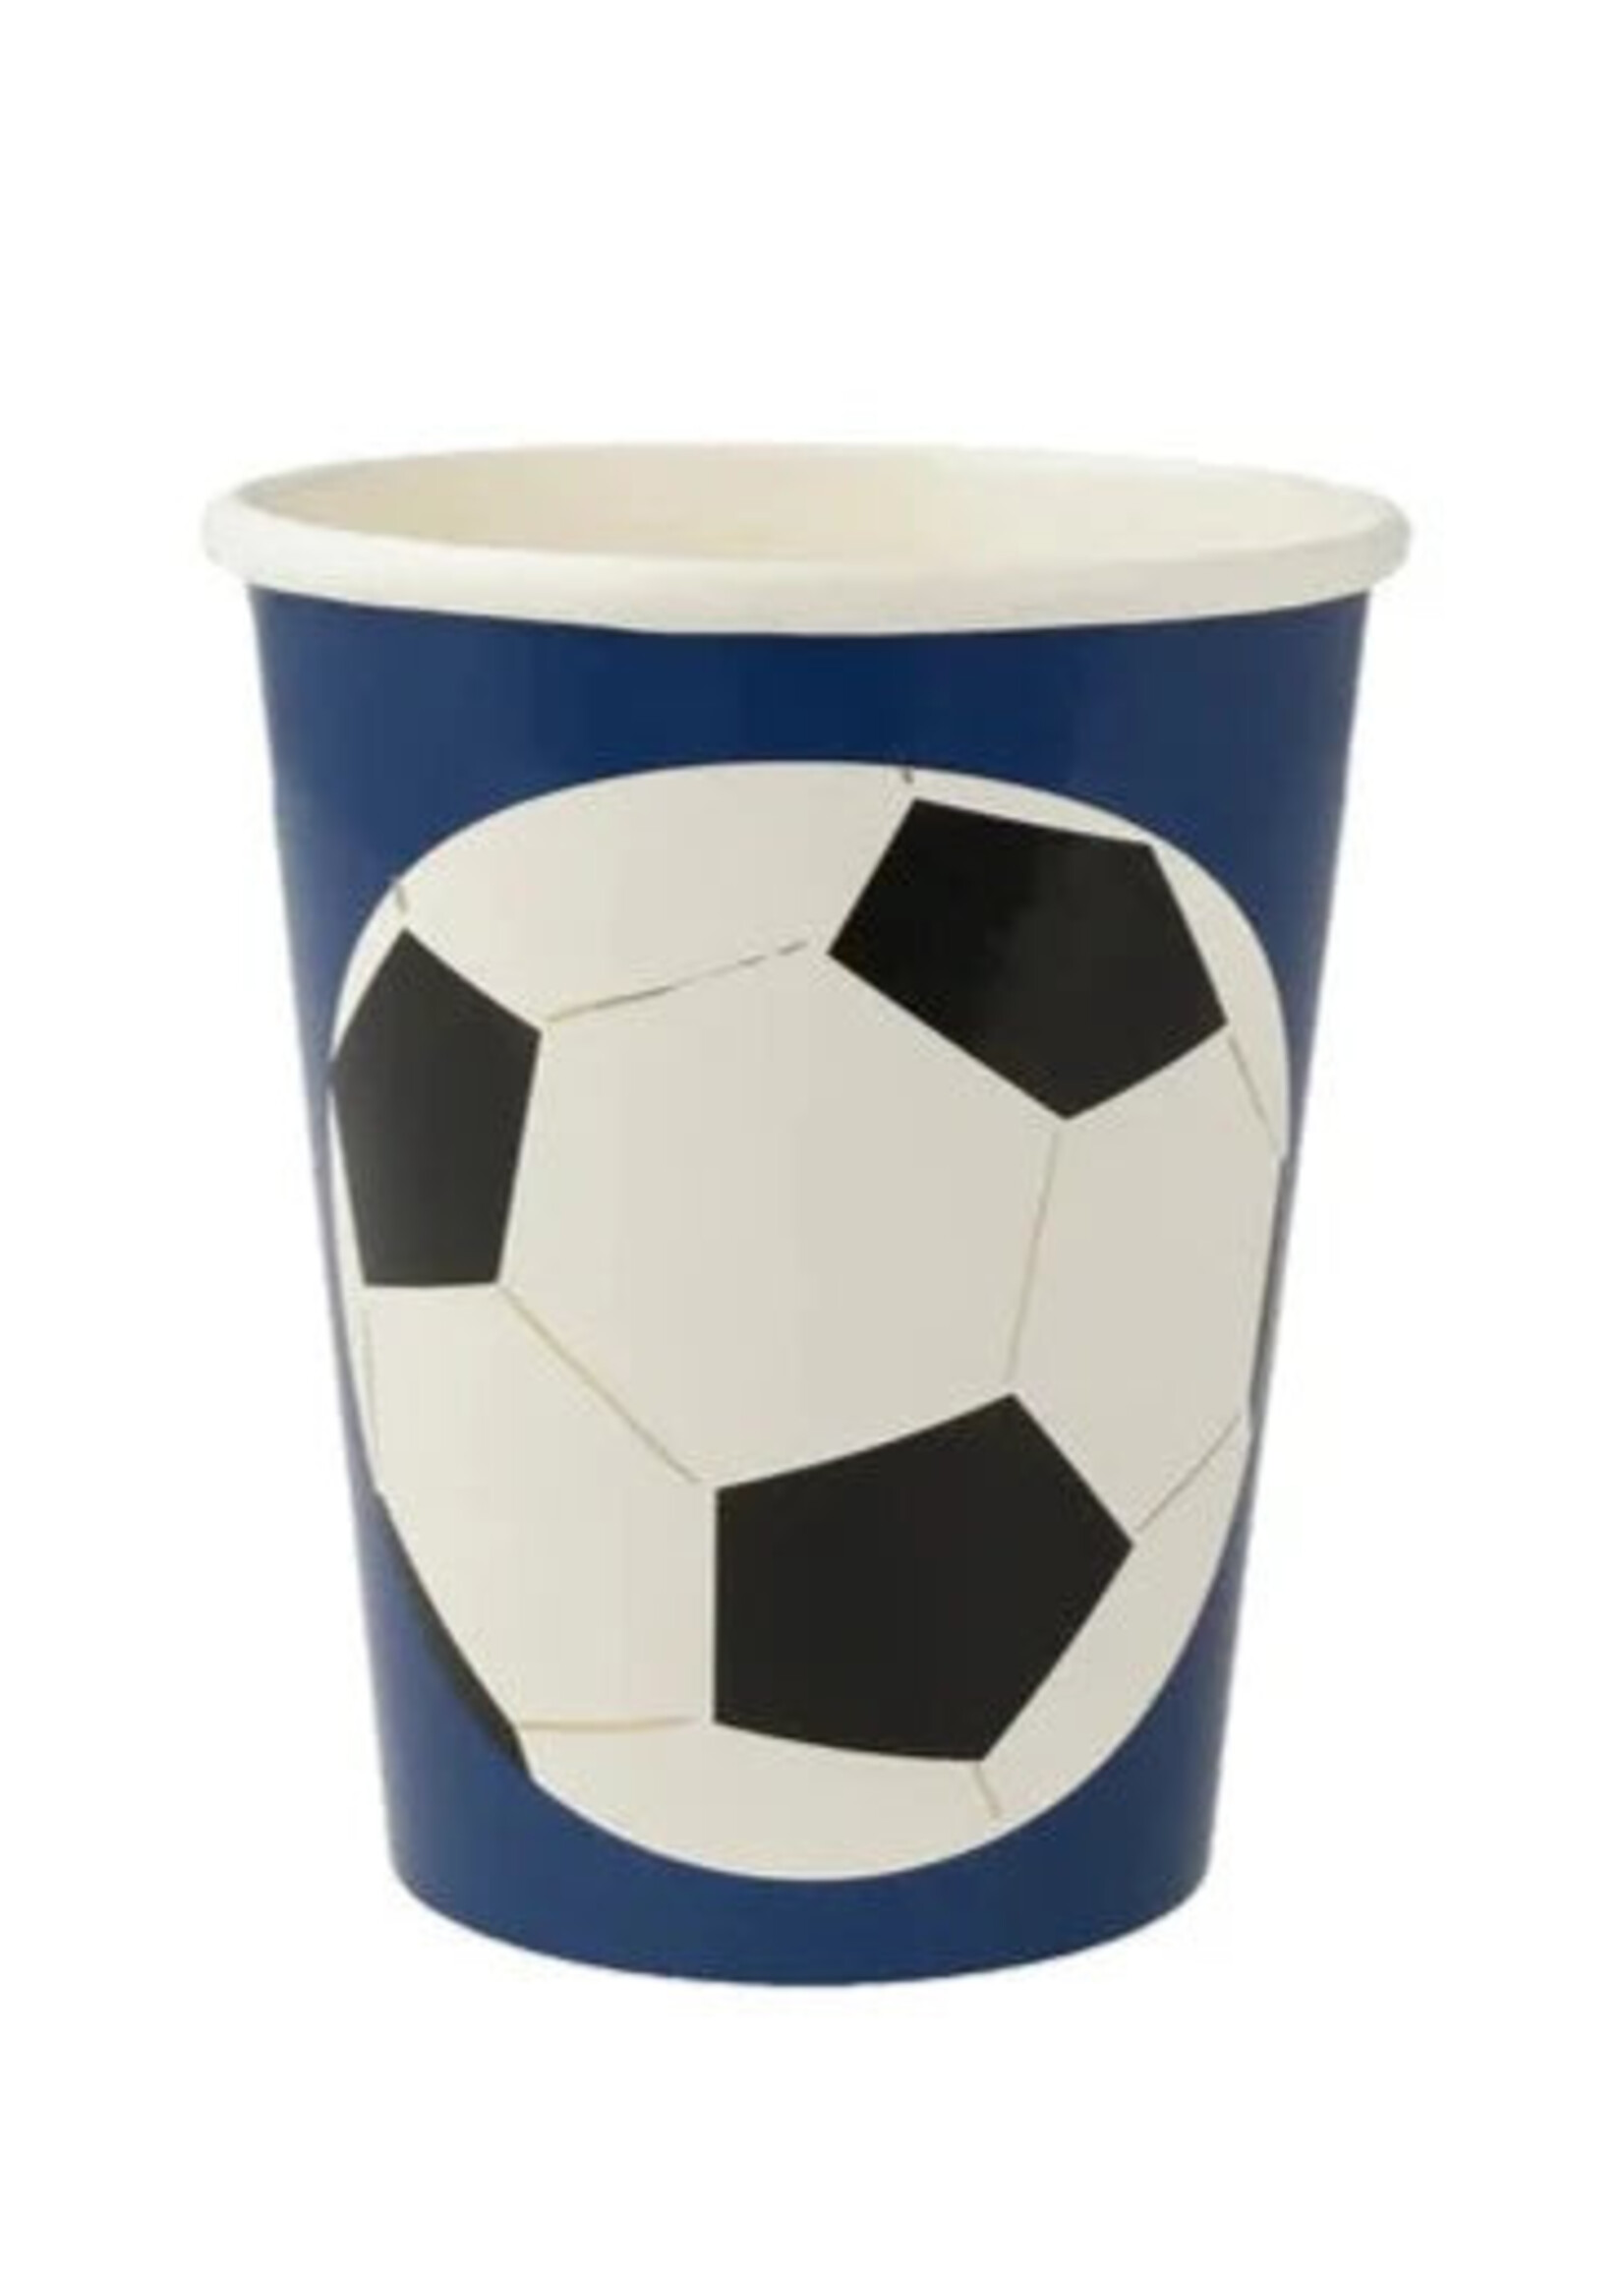 Meri Meri Soccer Cups